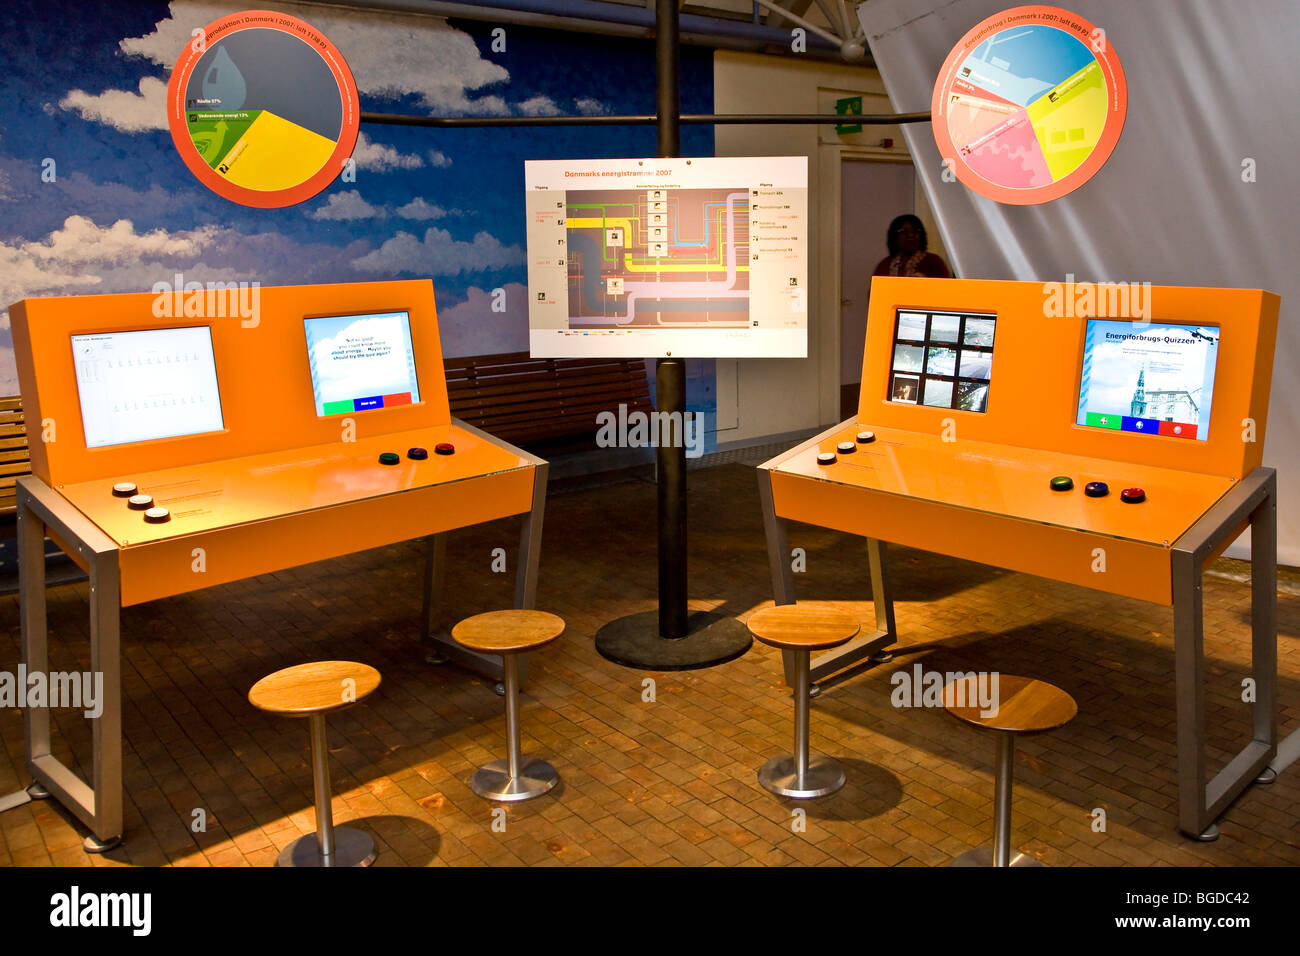 Computers for simulating the energy consumption, at the Experimentarium in Copenhagen, Denmark, Europe Stock Photo